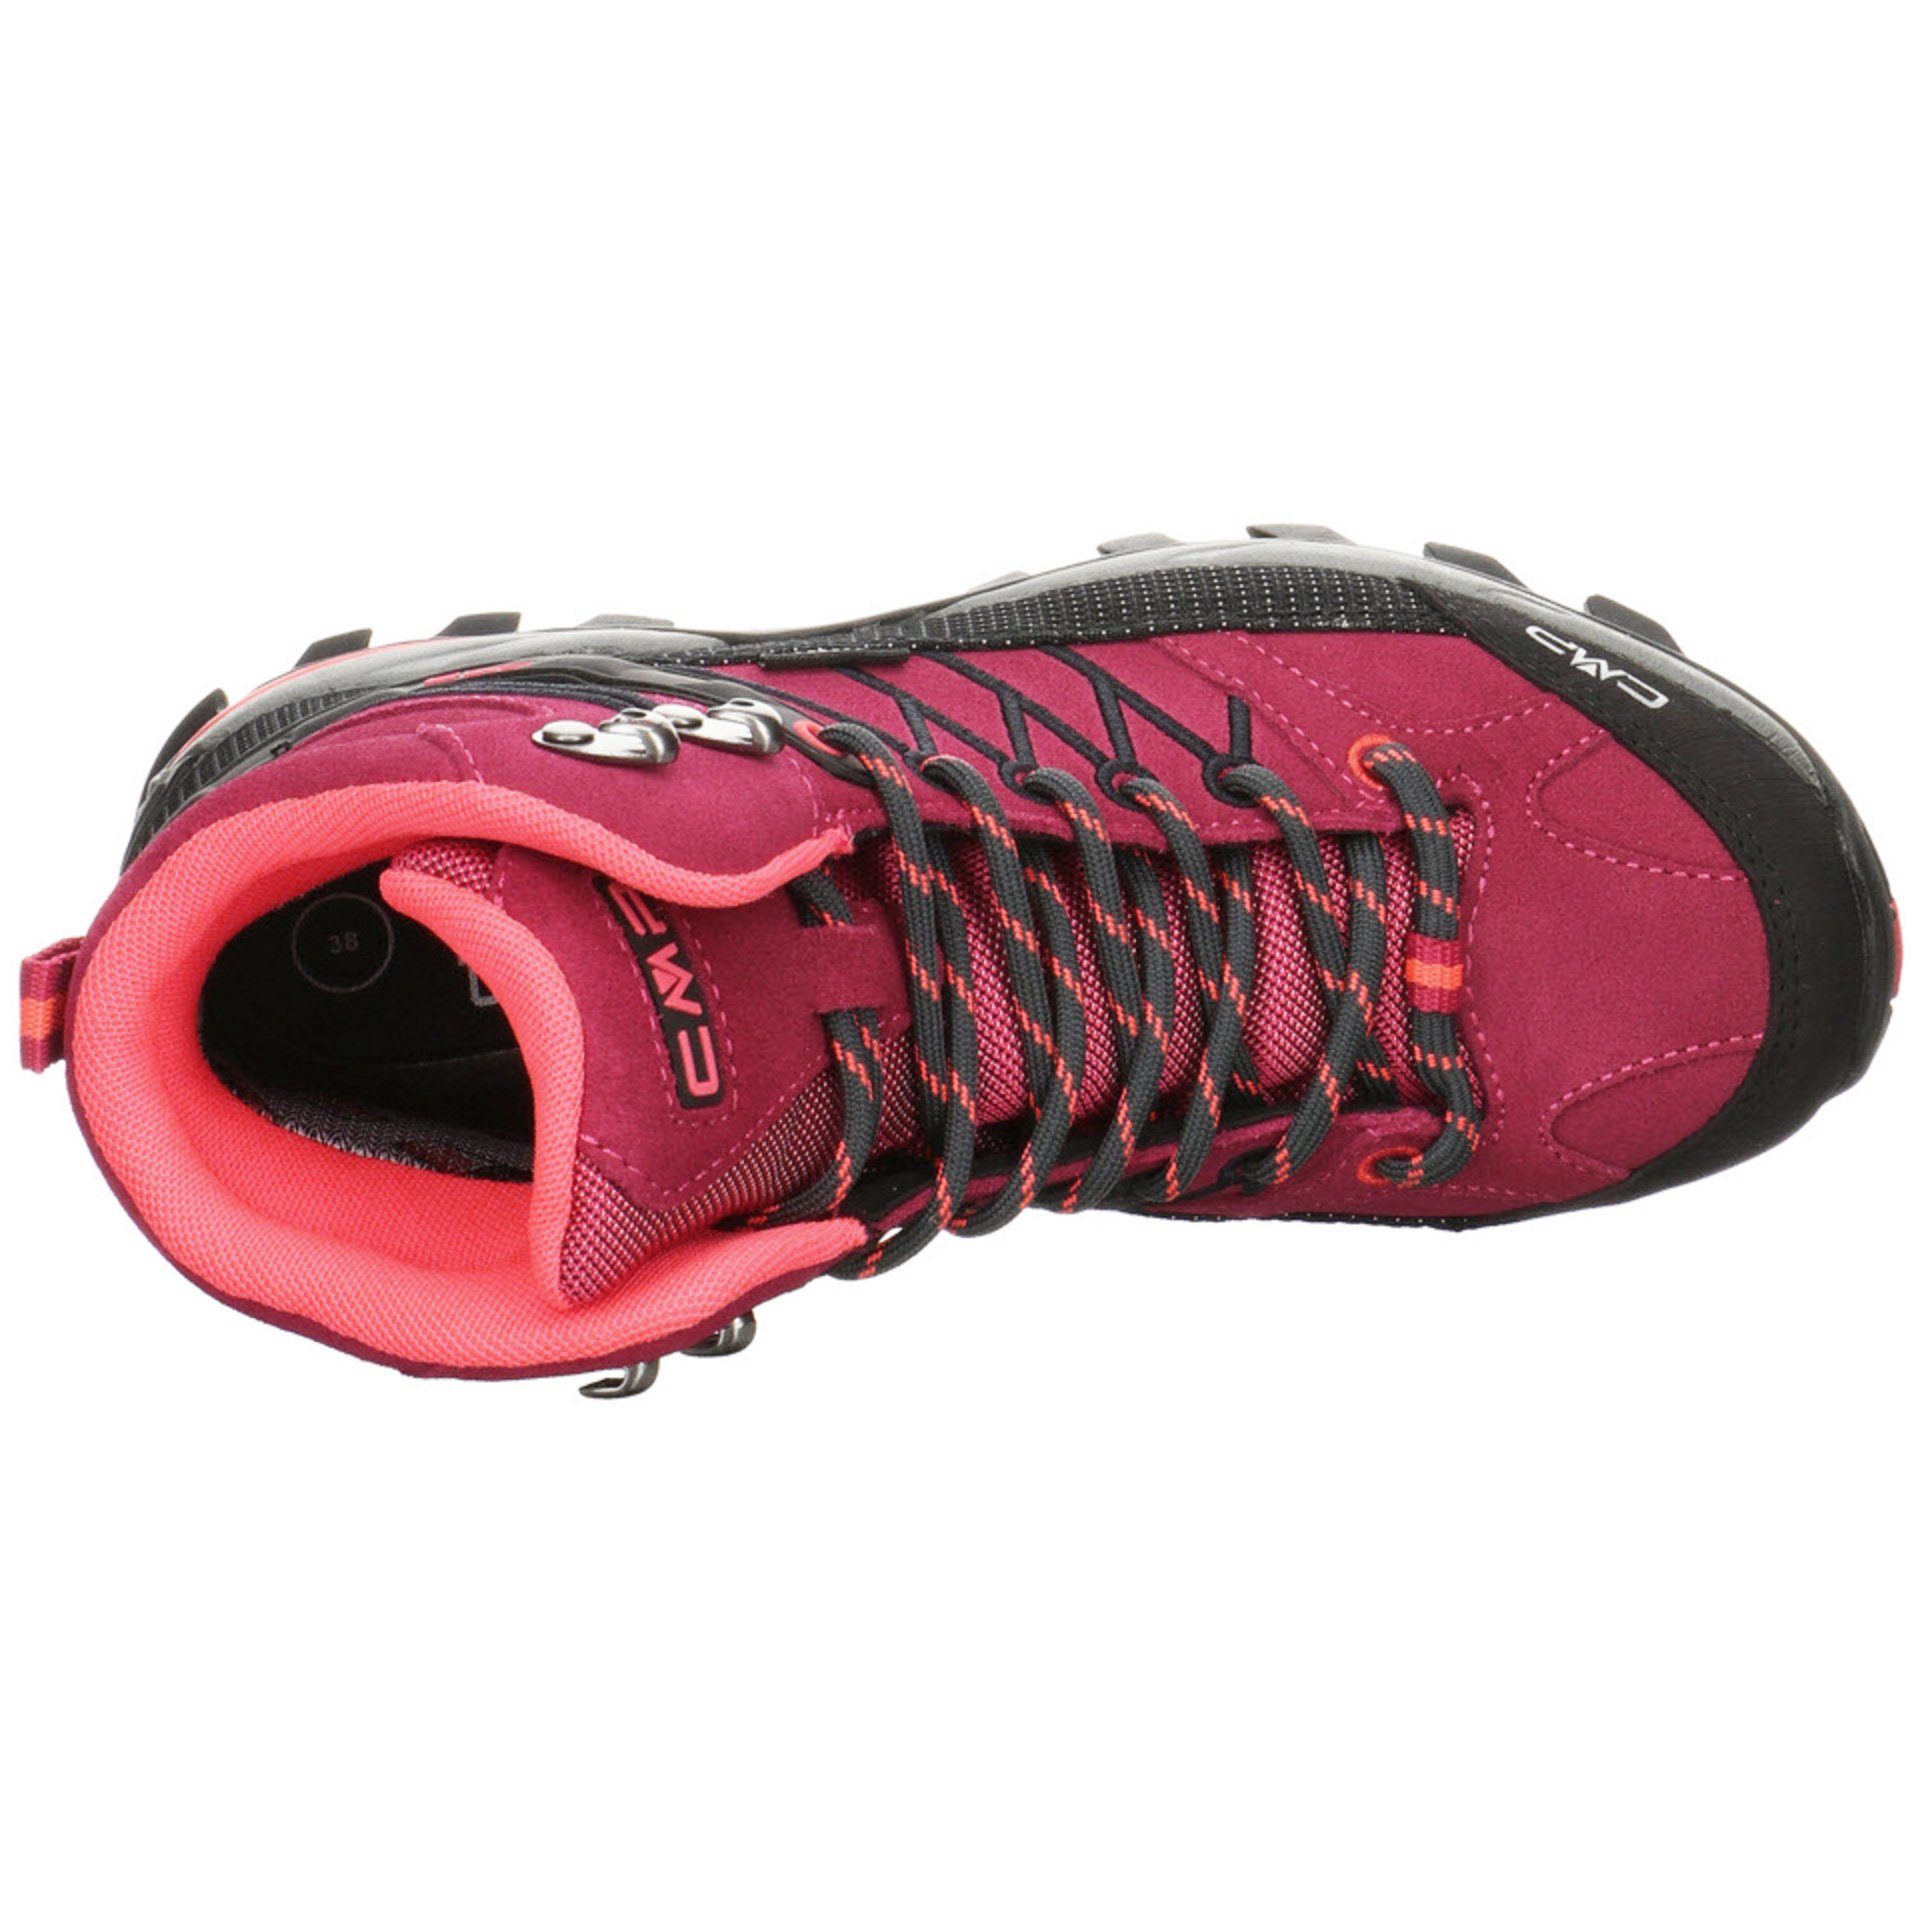 CMP Damen Schuhe Outdoor Rigel Leder-/Textilkombination Outdoorschuh Mid MAGENTA-ANTRACITE Outdoorschuh